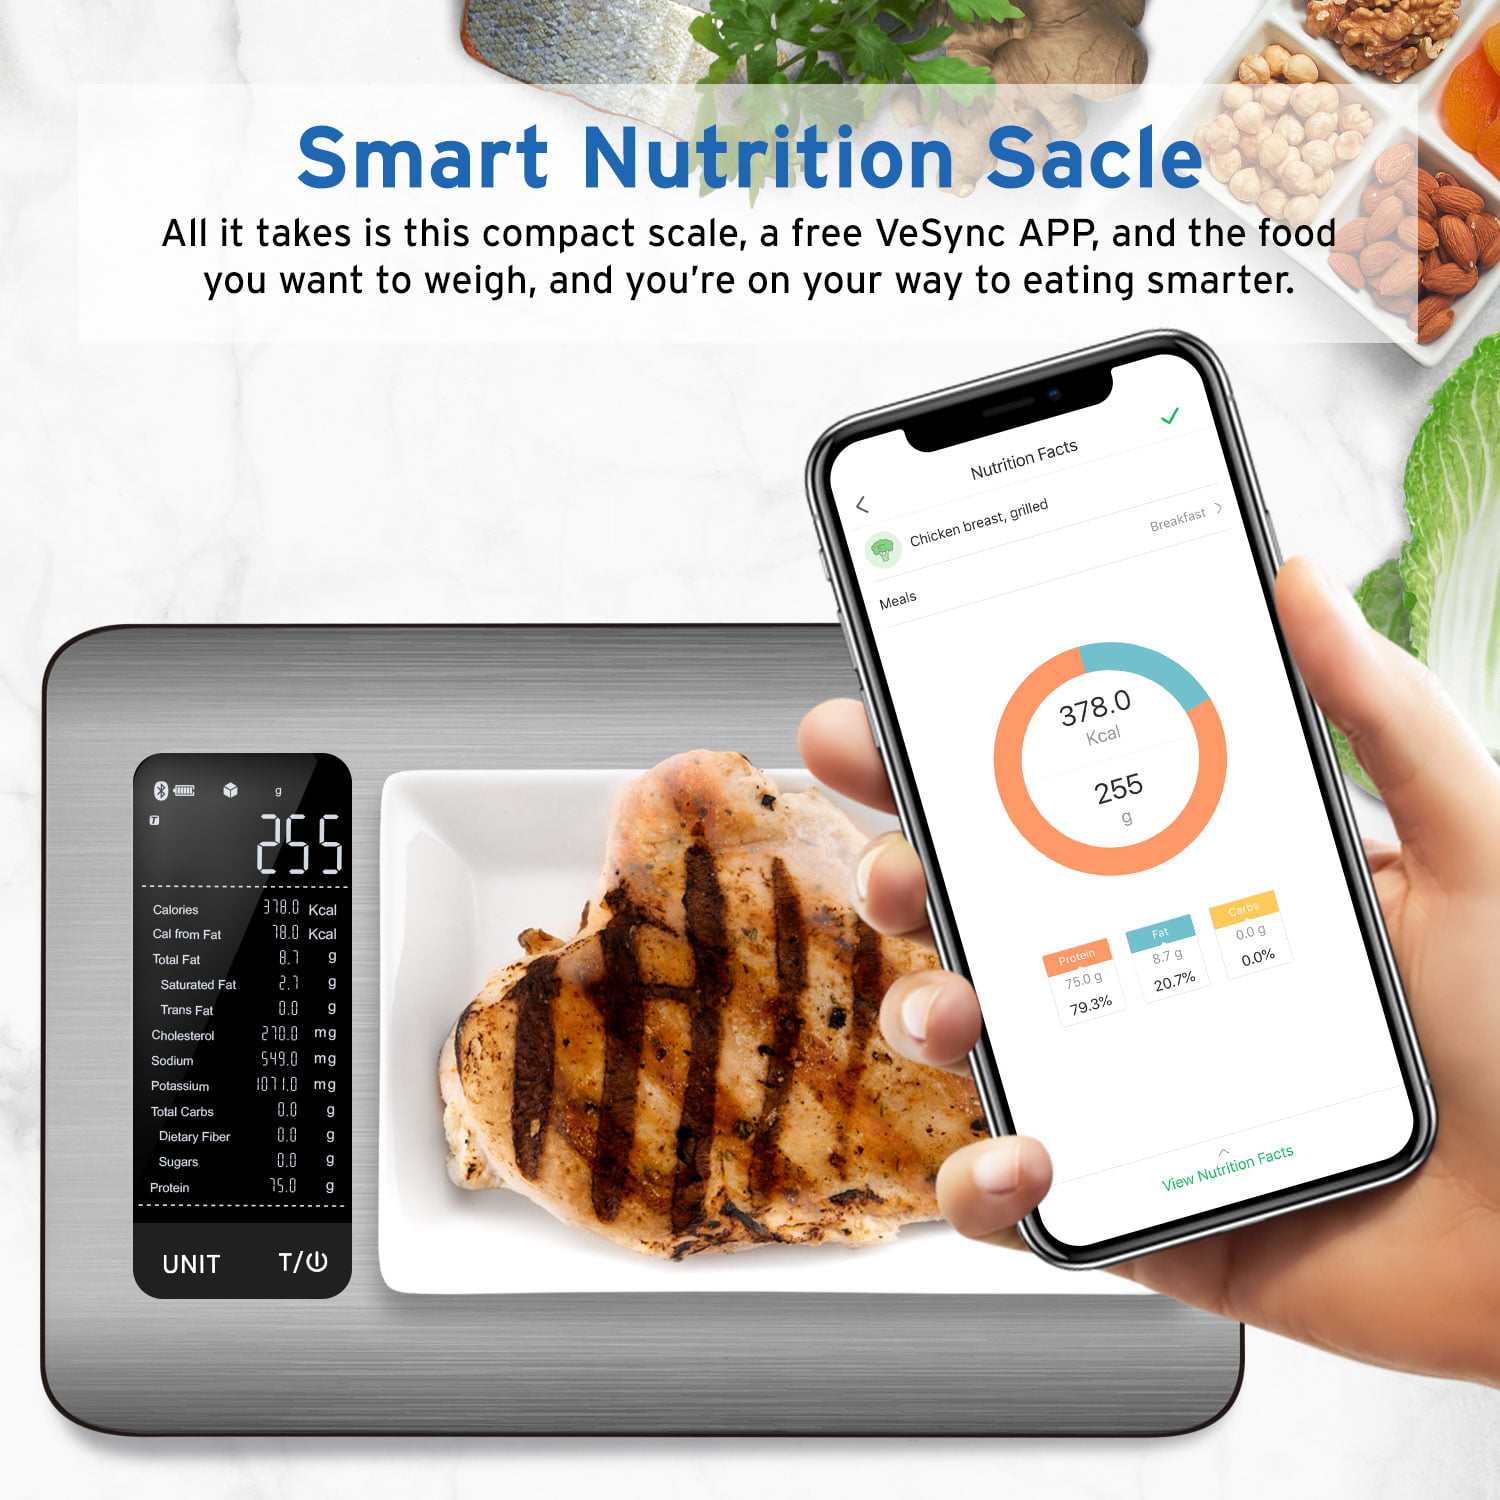 Etekcity ESN00 Digital Kitchen Scale, Smart Food Scale with